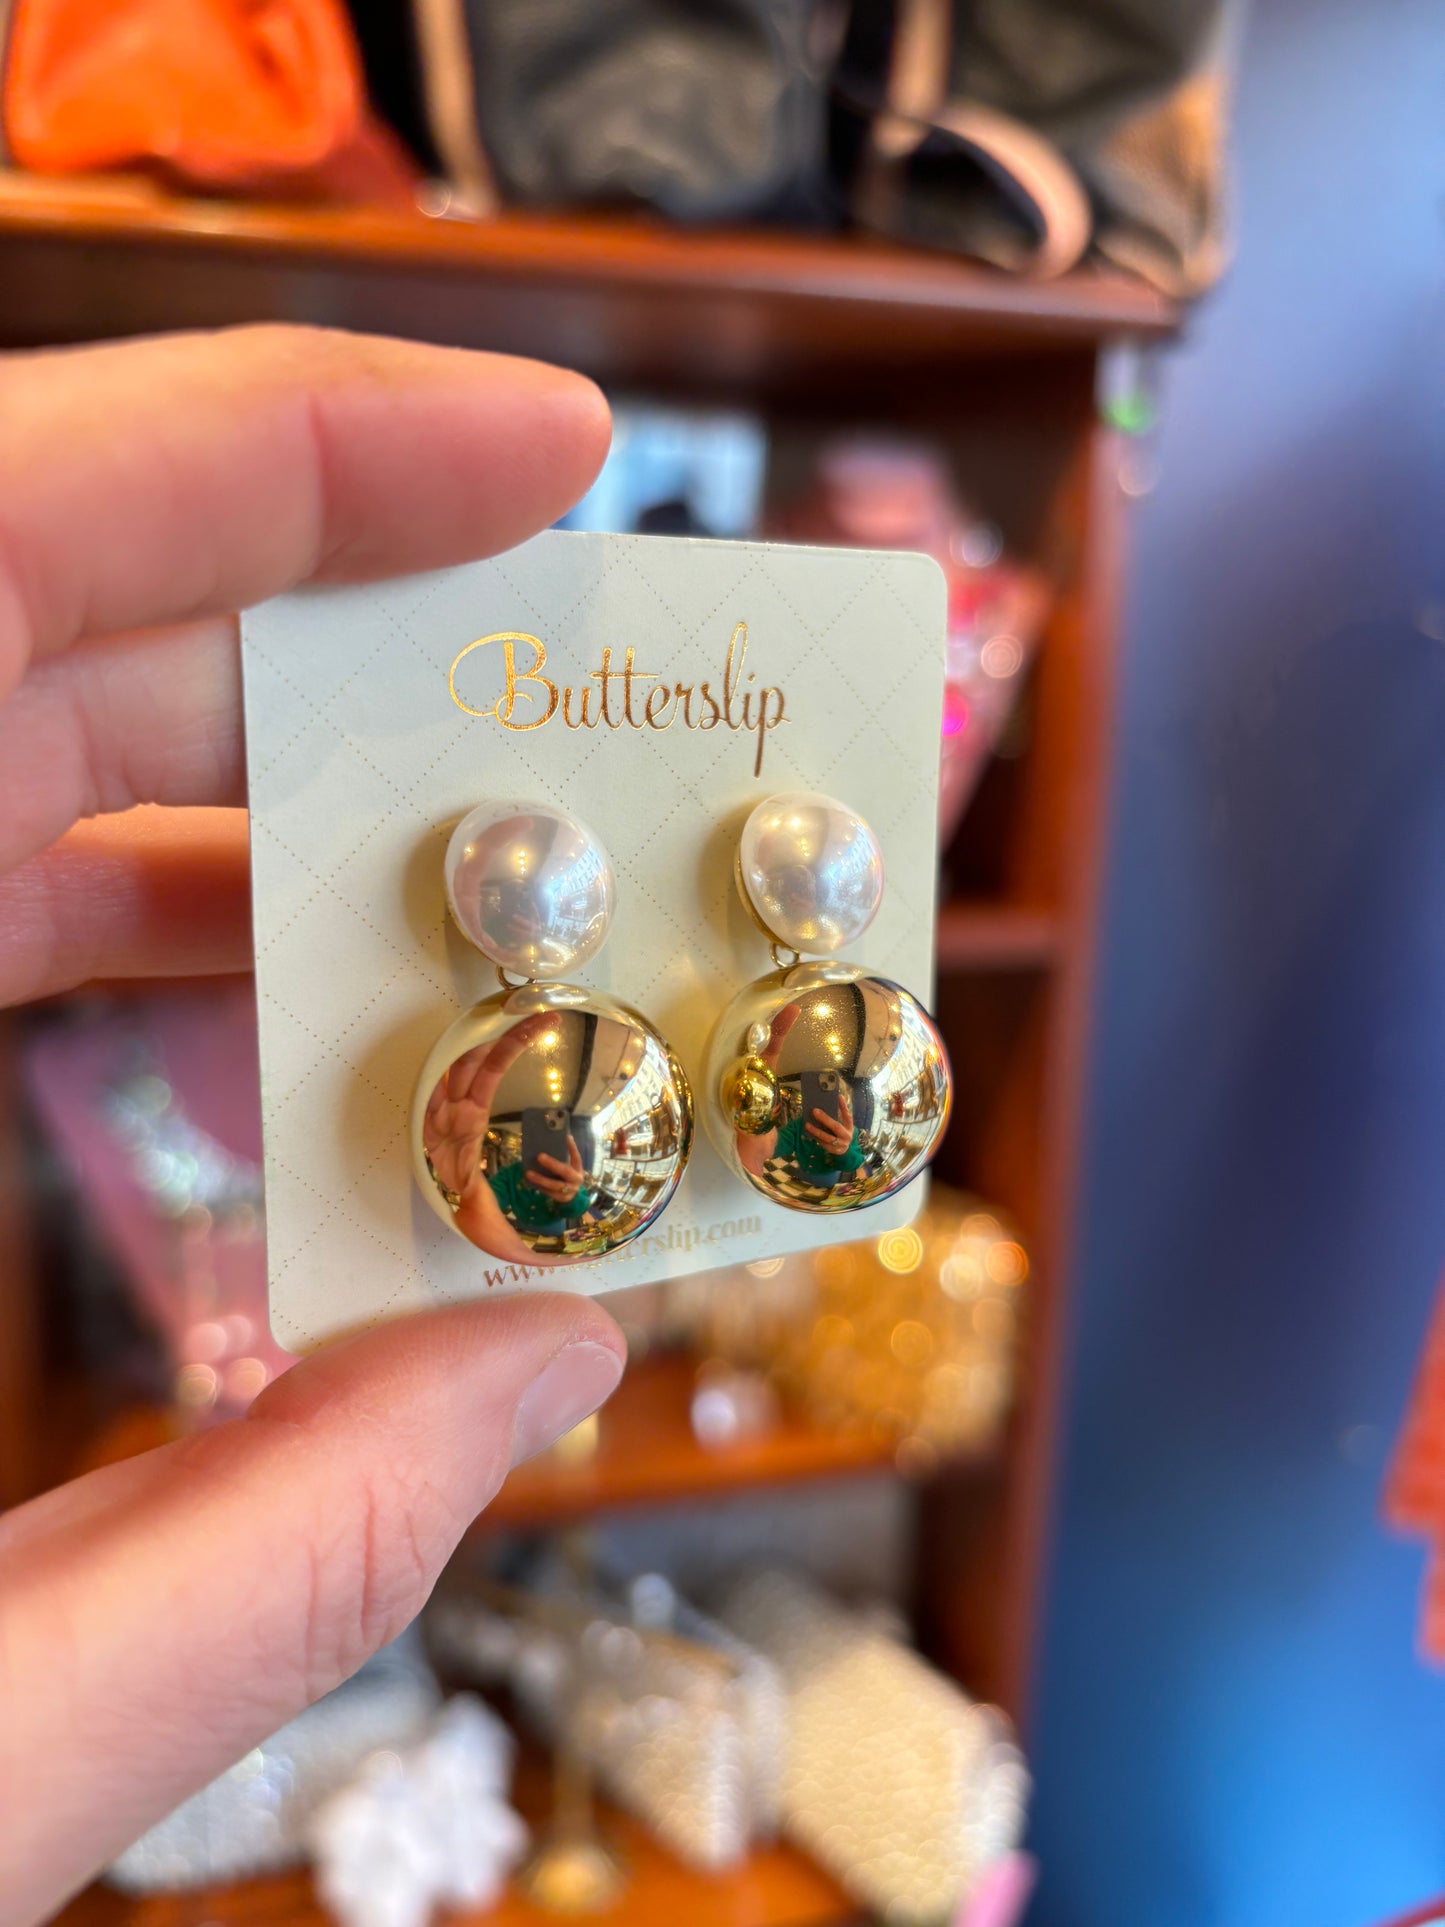 Pearl & Gold Ball Earrings